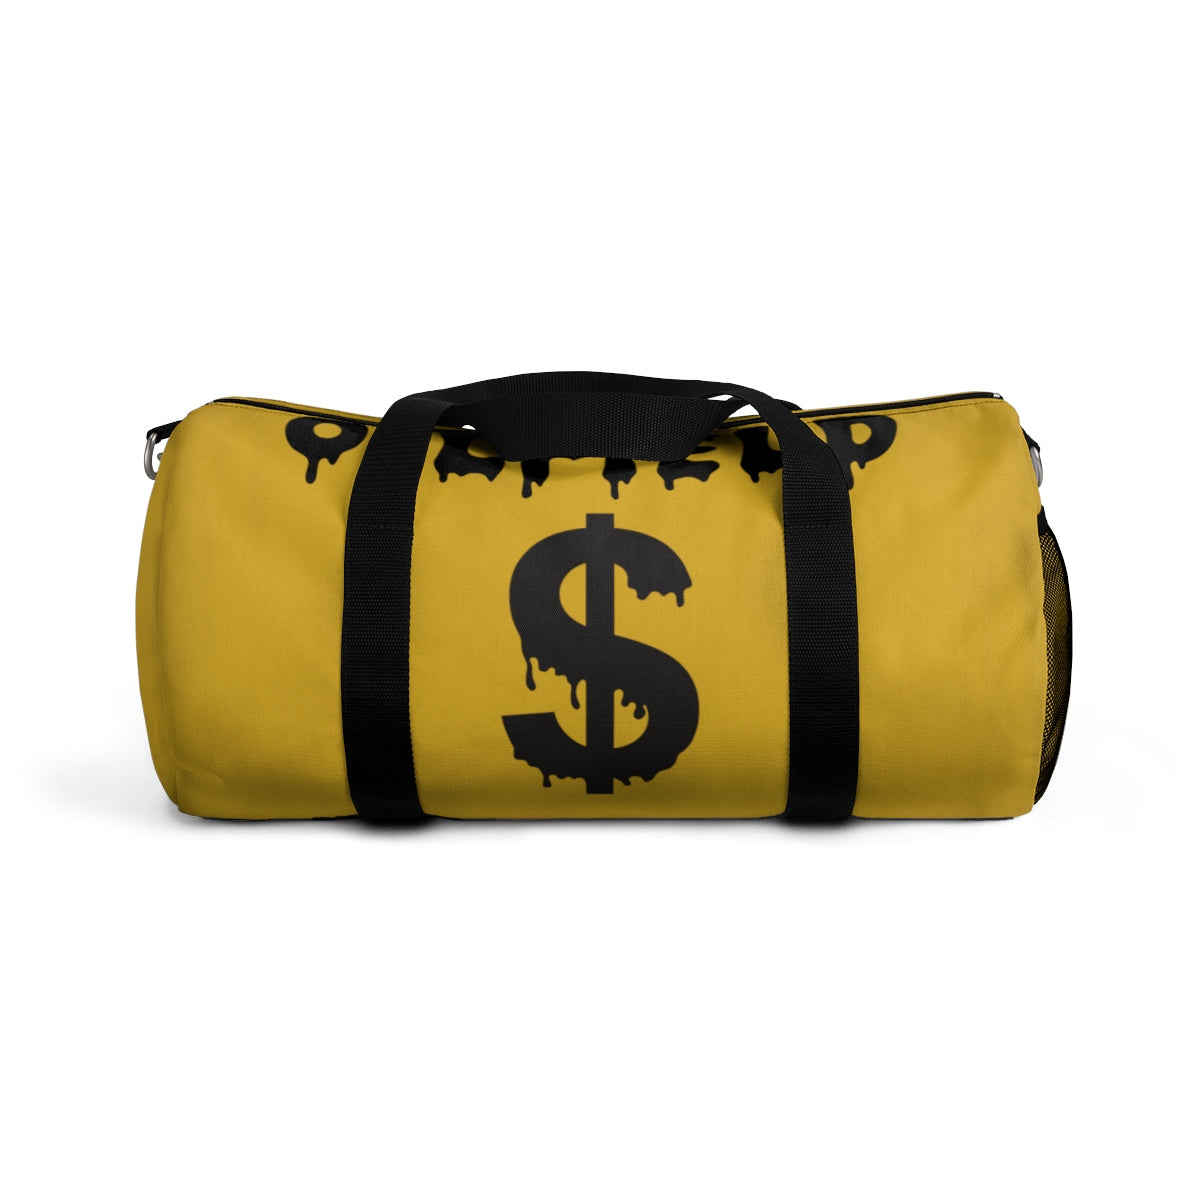 Money Duffle Bag